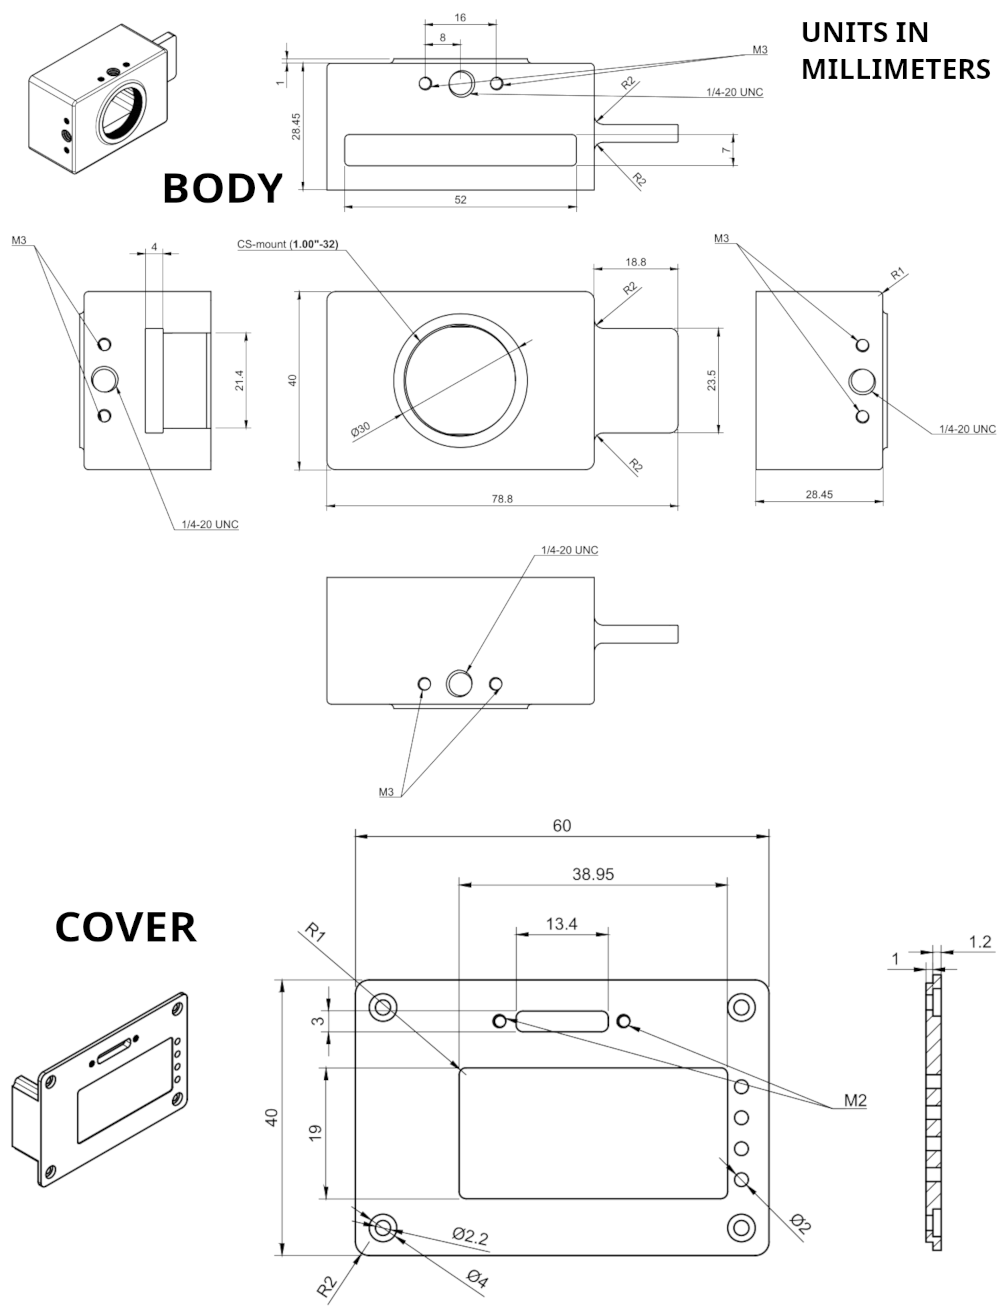 Dimensions of the DAVIS 346 AER camera case